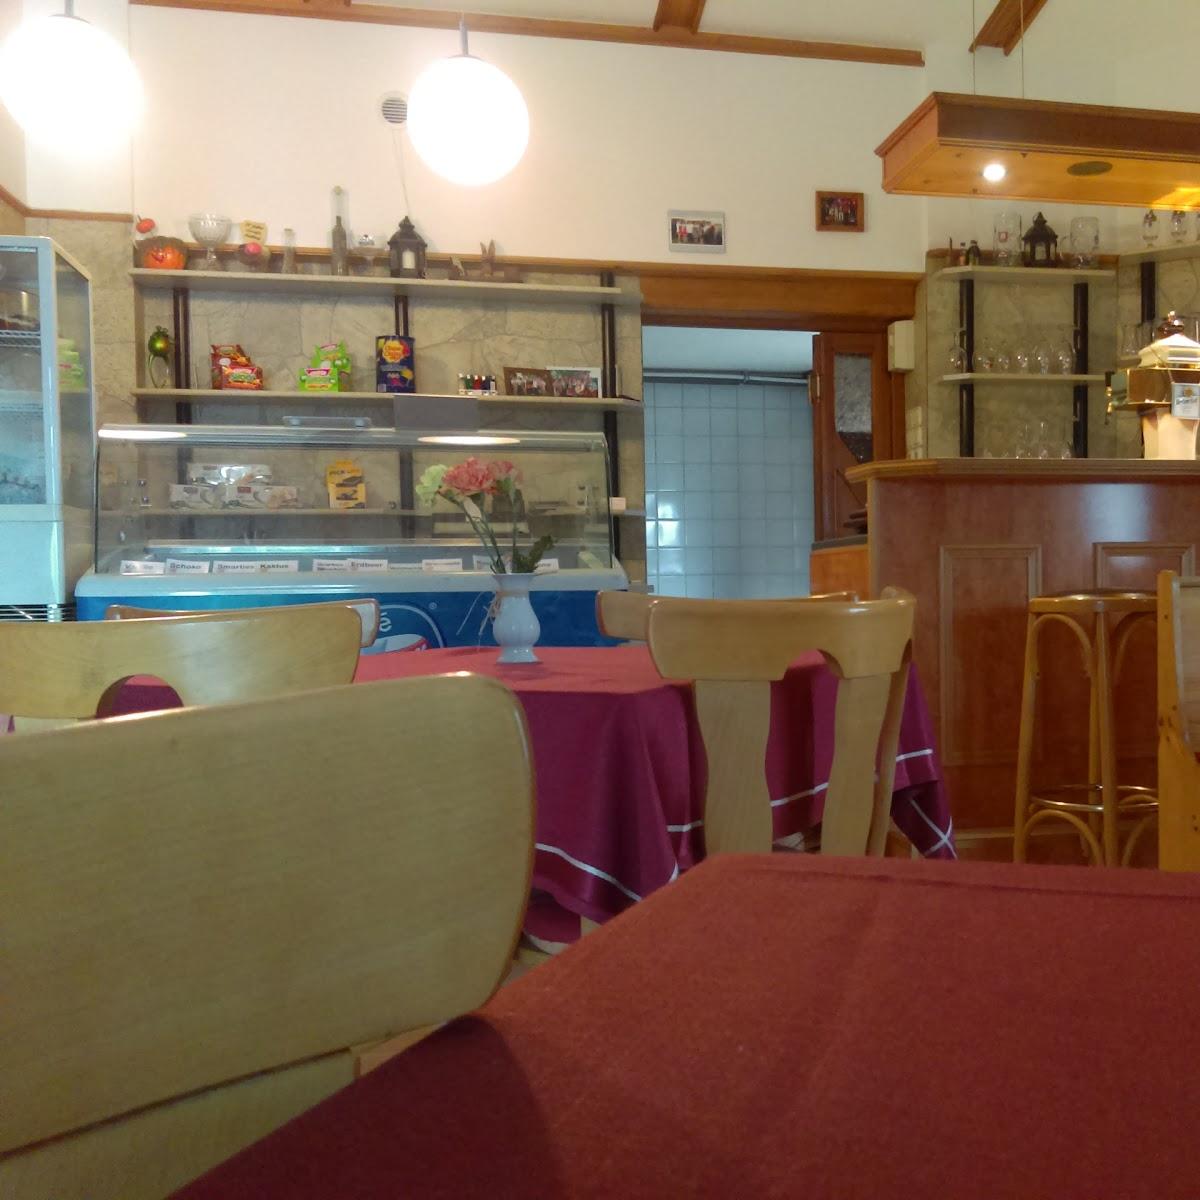 Restaurant "Eiscafé Kolberg" in Trebbin